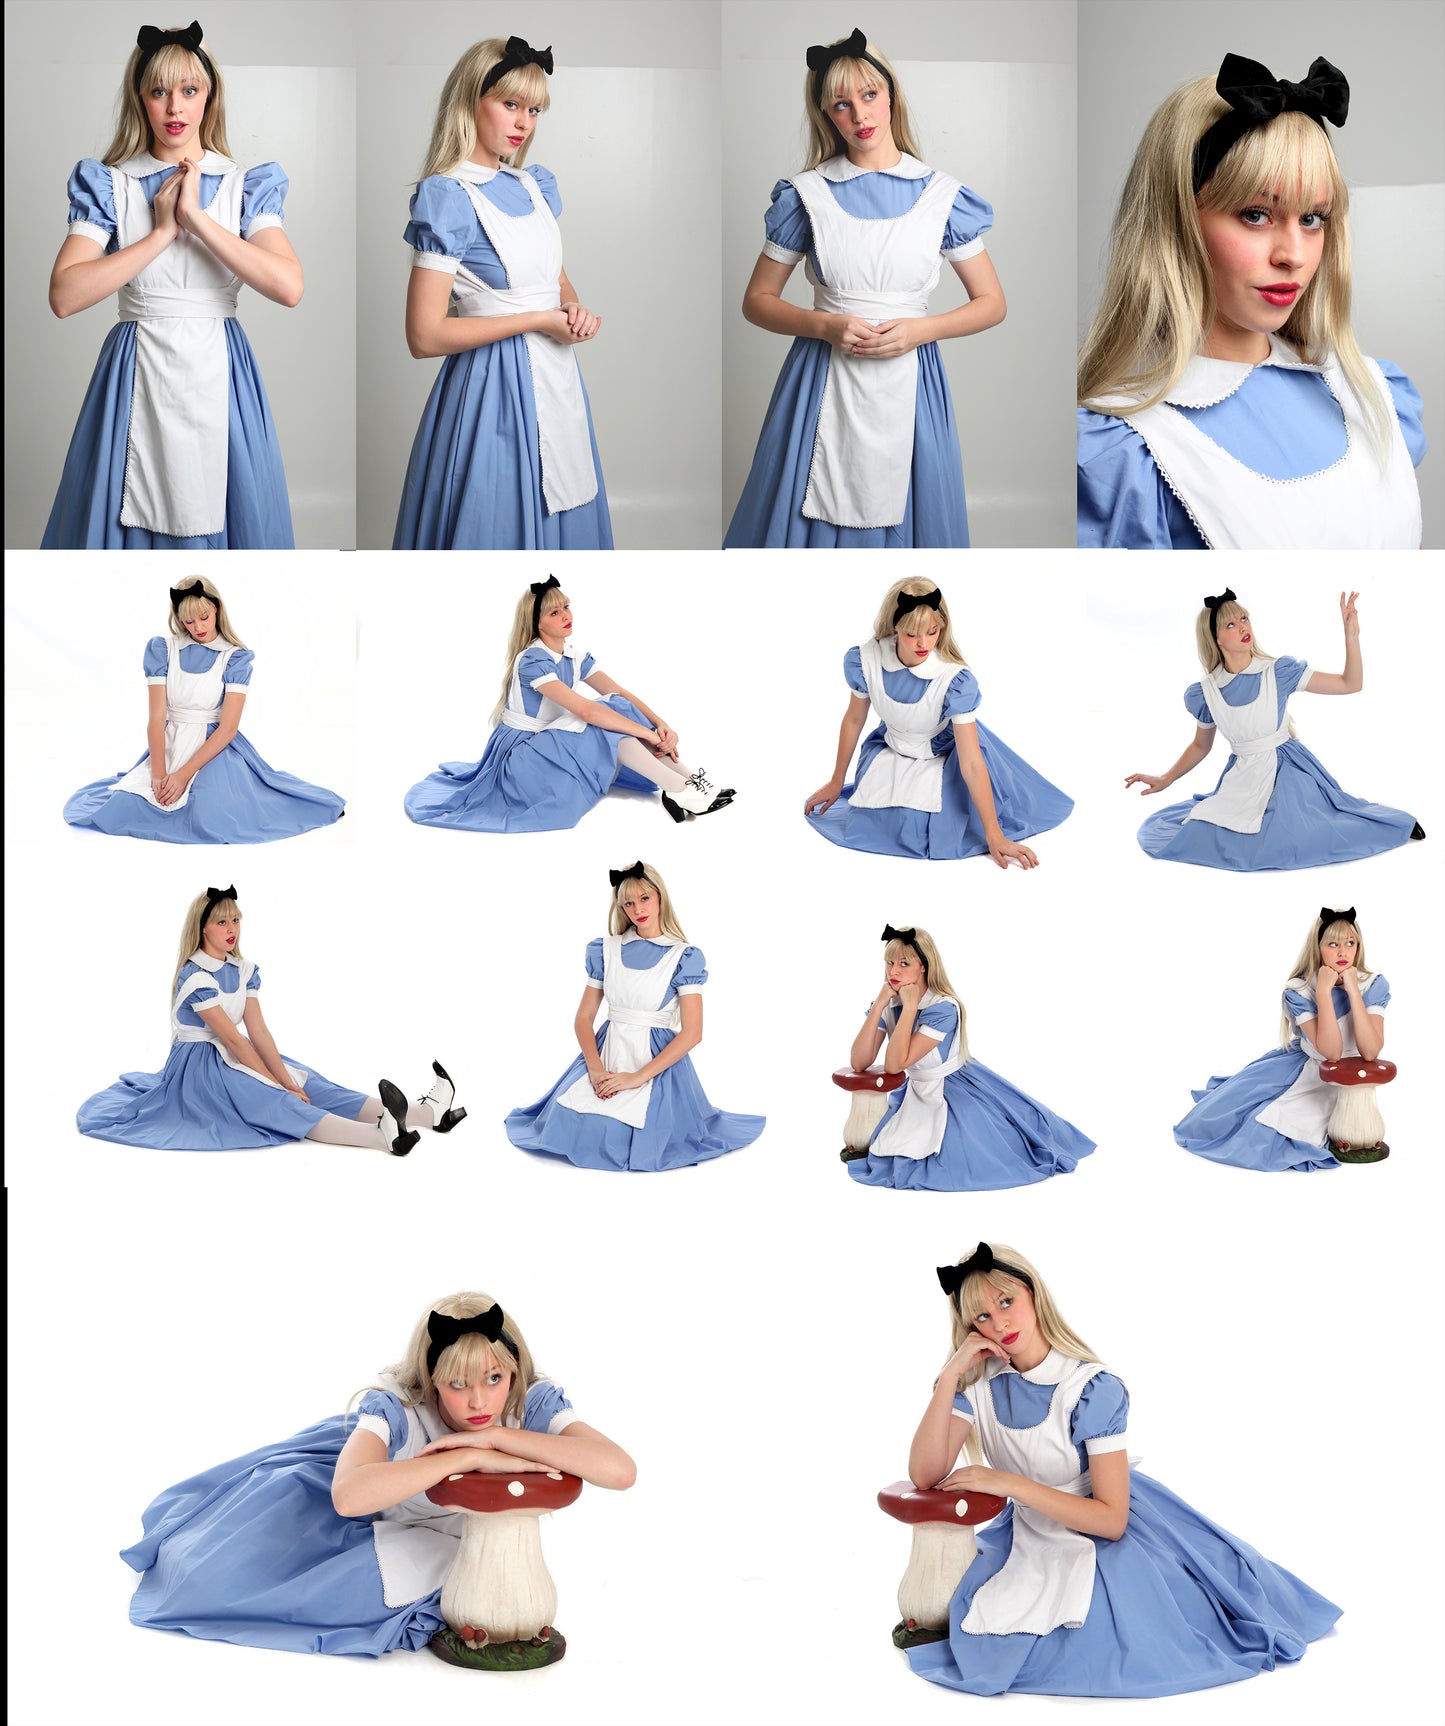 Alice in Wonderland - Stock model pose reference pack